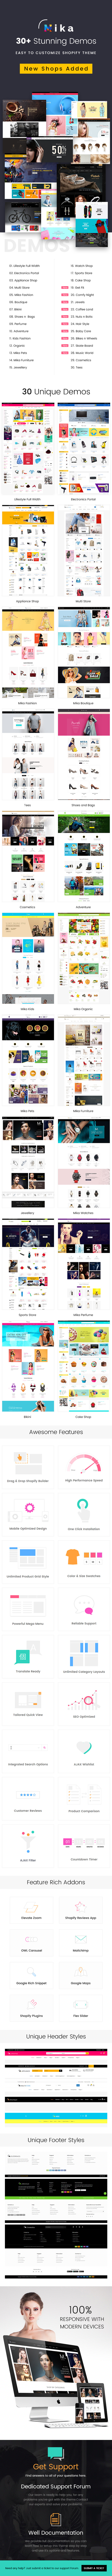 Mika - Multipurpose eCommerce Shopify Theme - 5